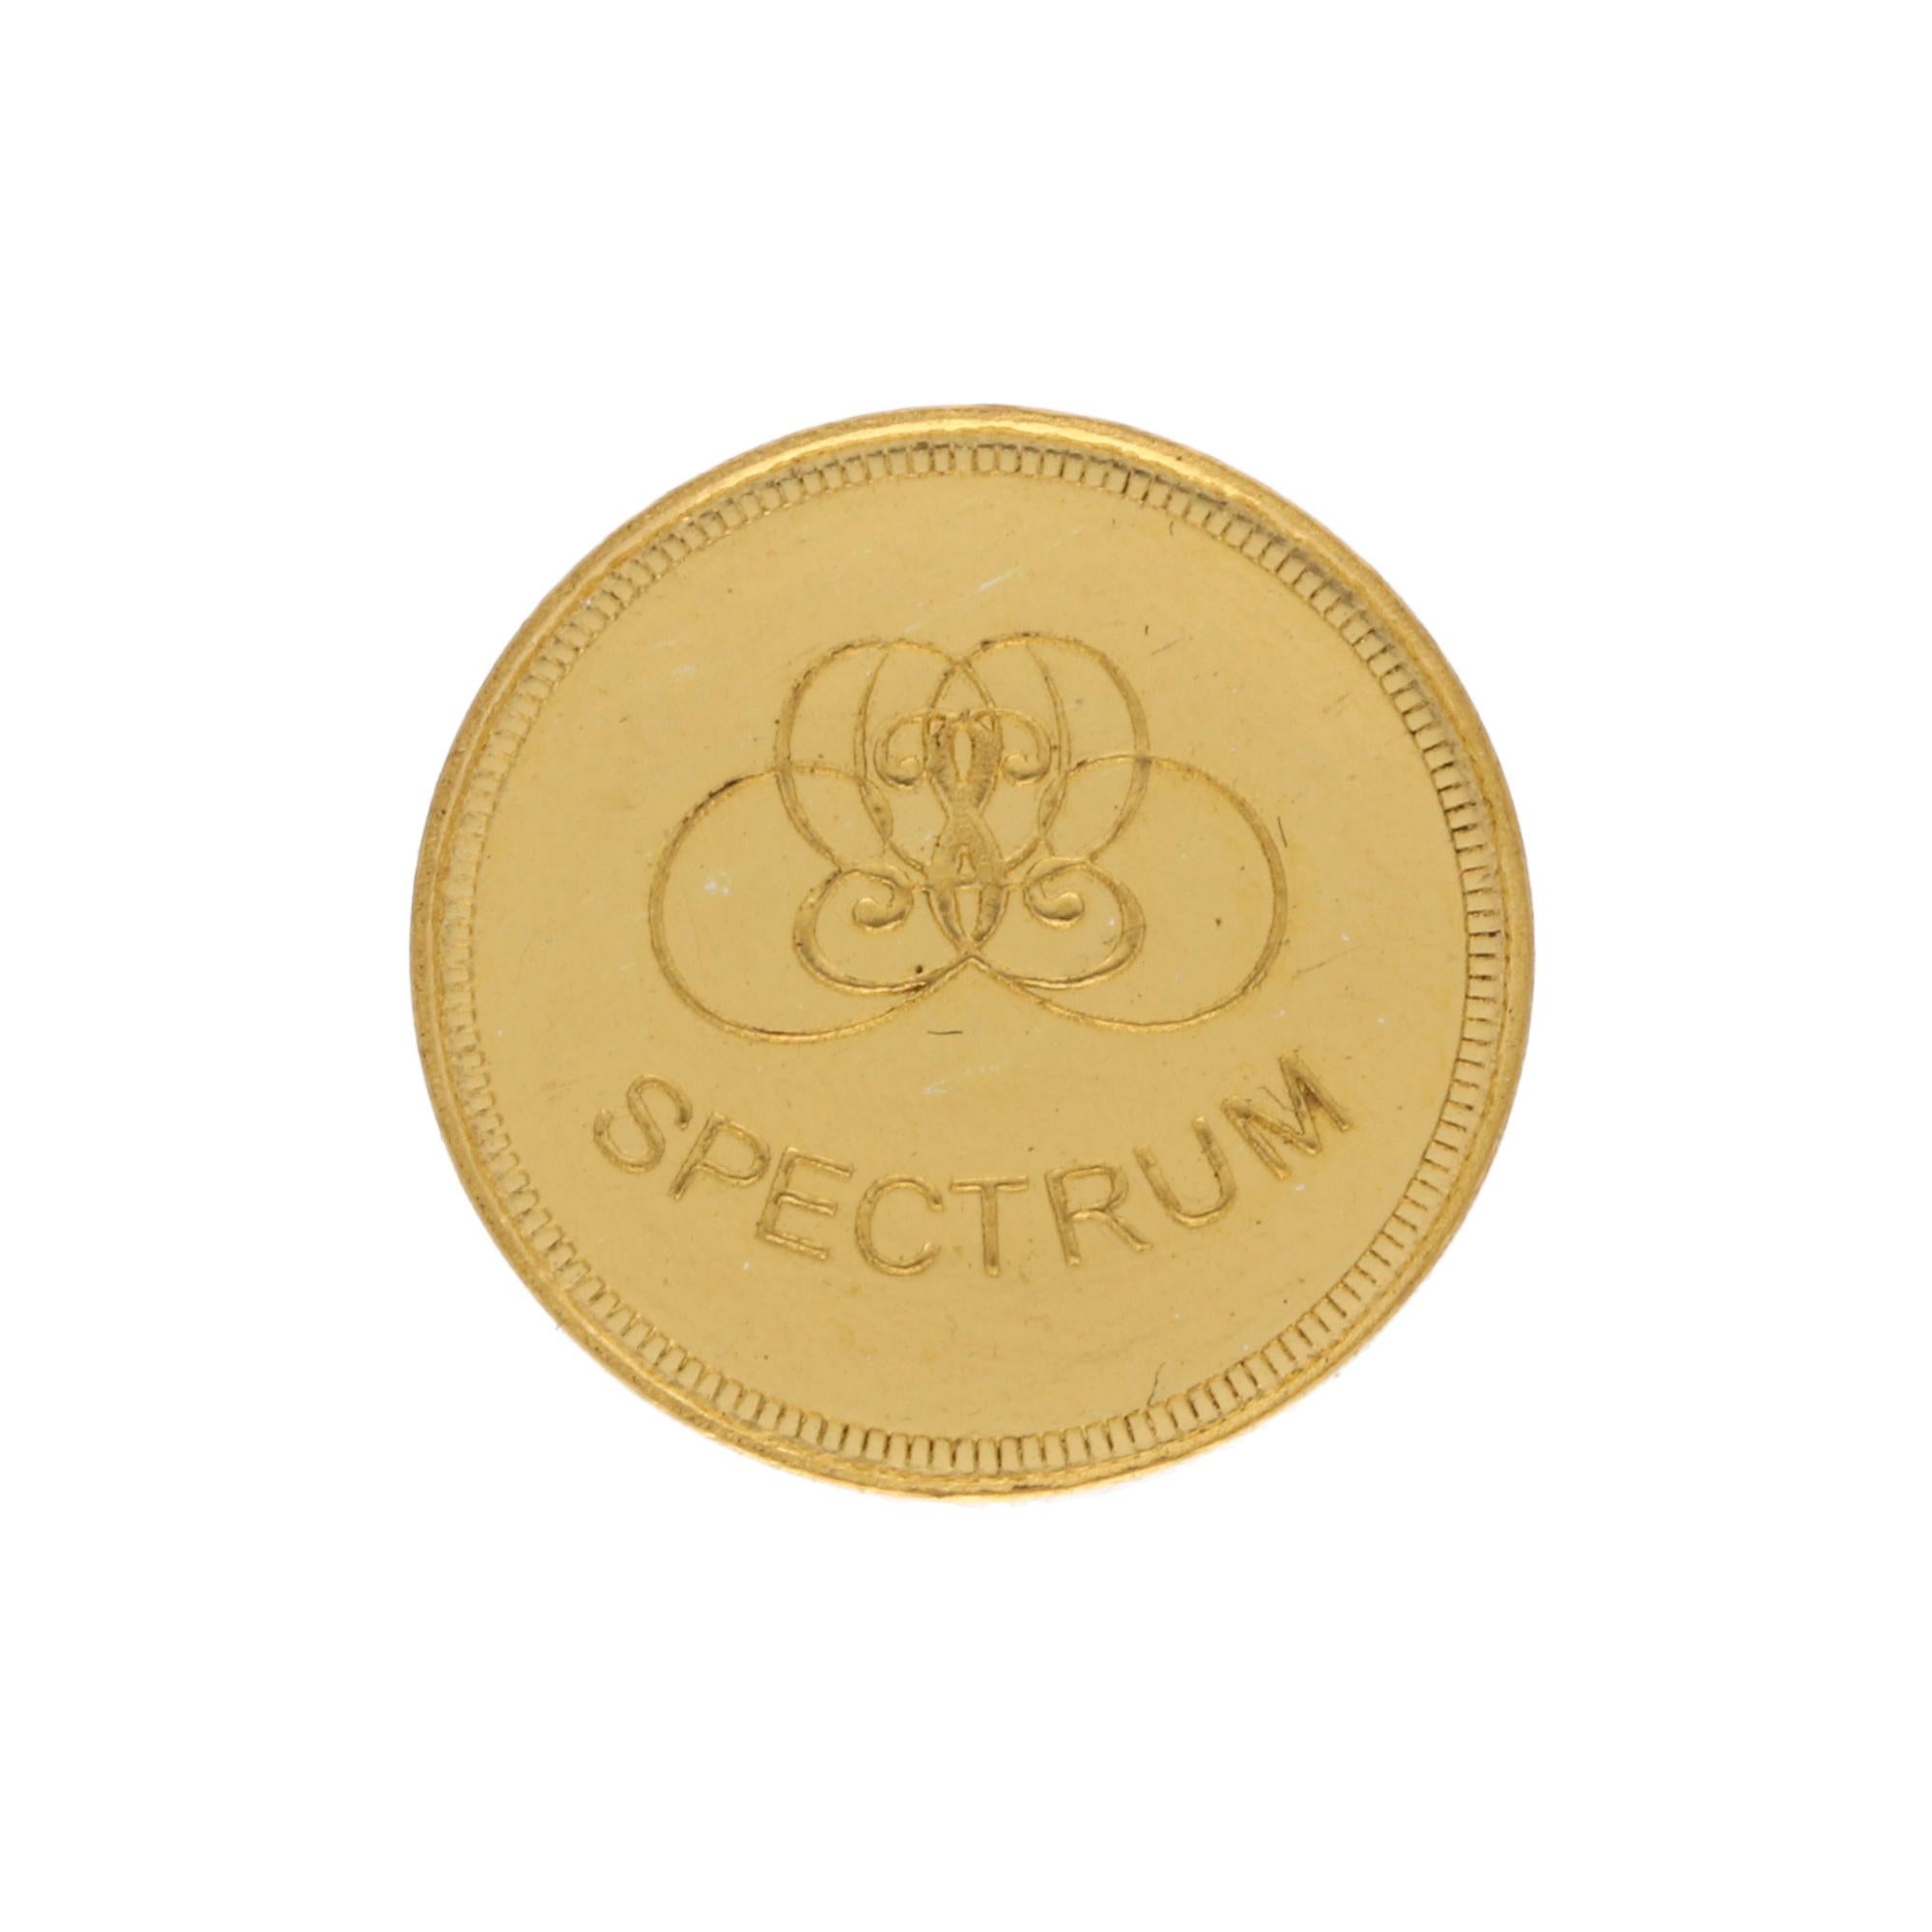 Modern 0.5 grams Spectrum Logo 24 Karat Gold Coin For Sale